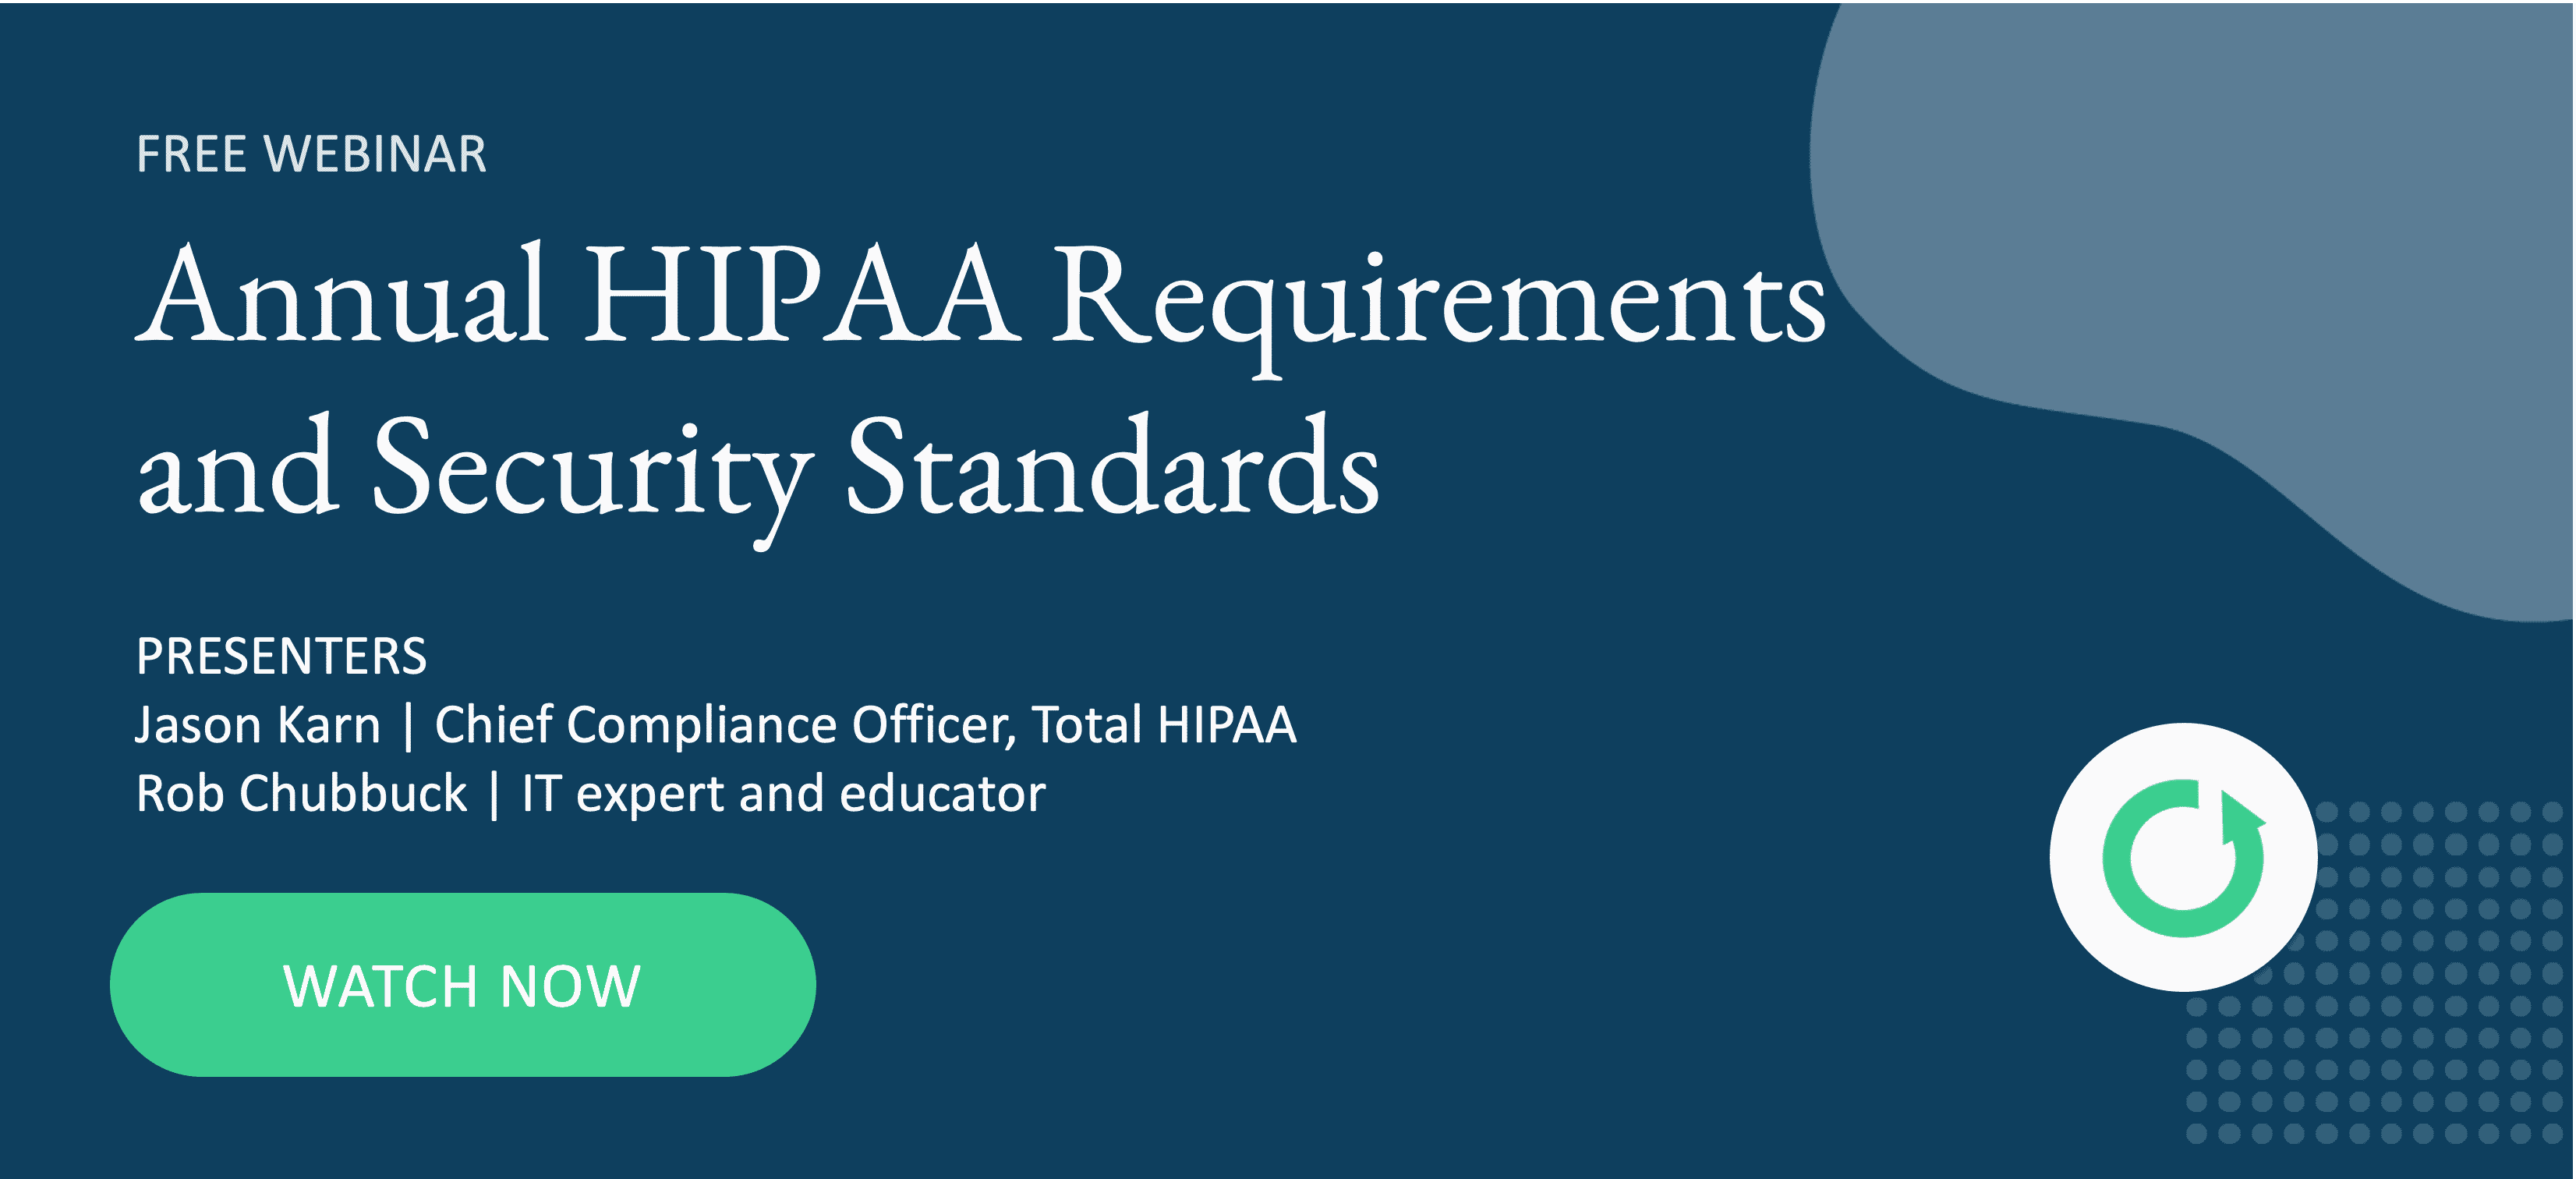 Annual HIPAA Requirements